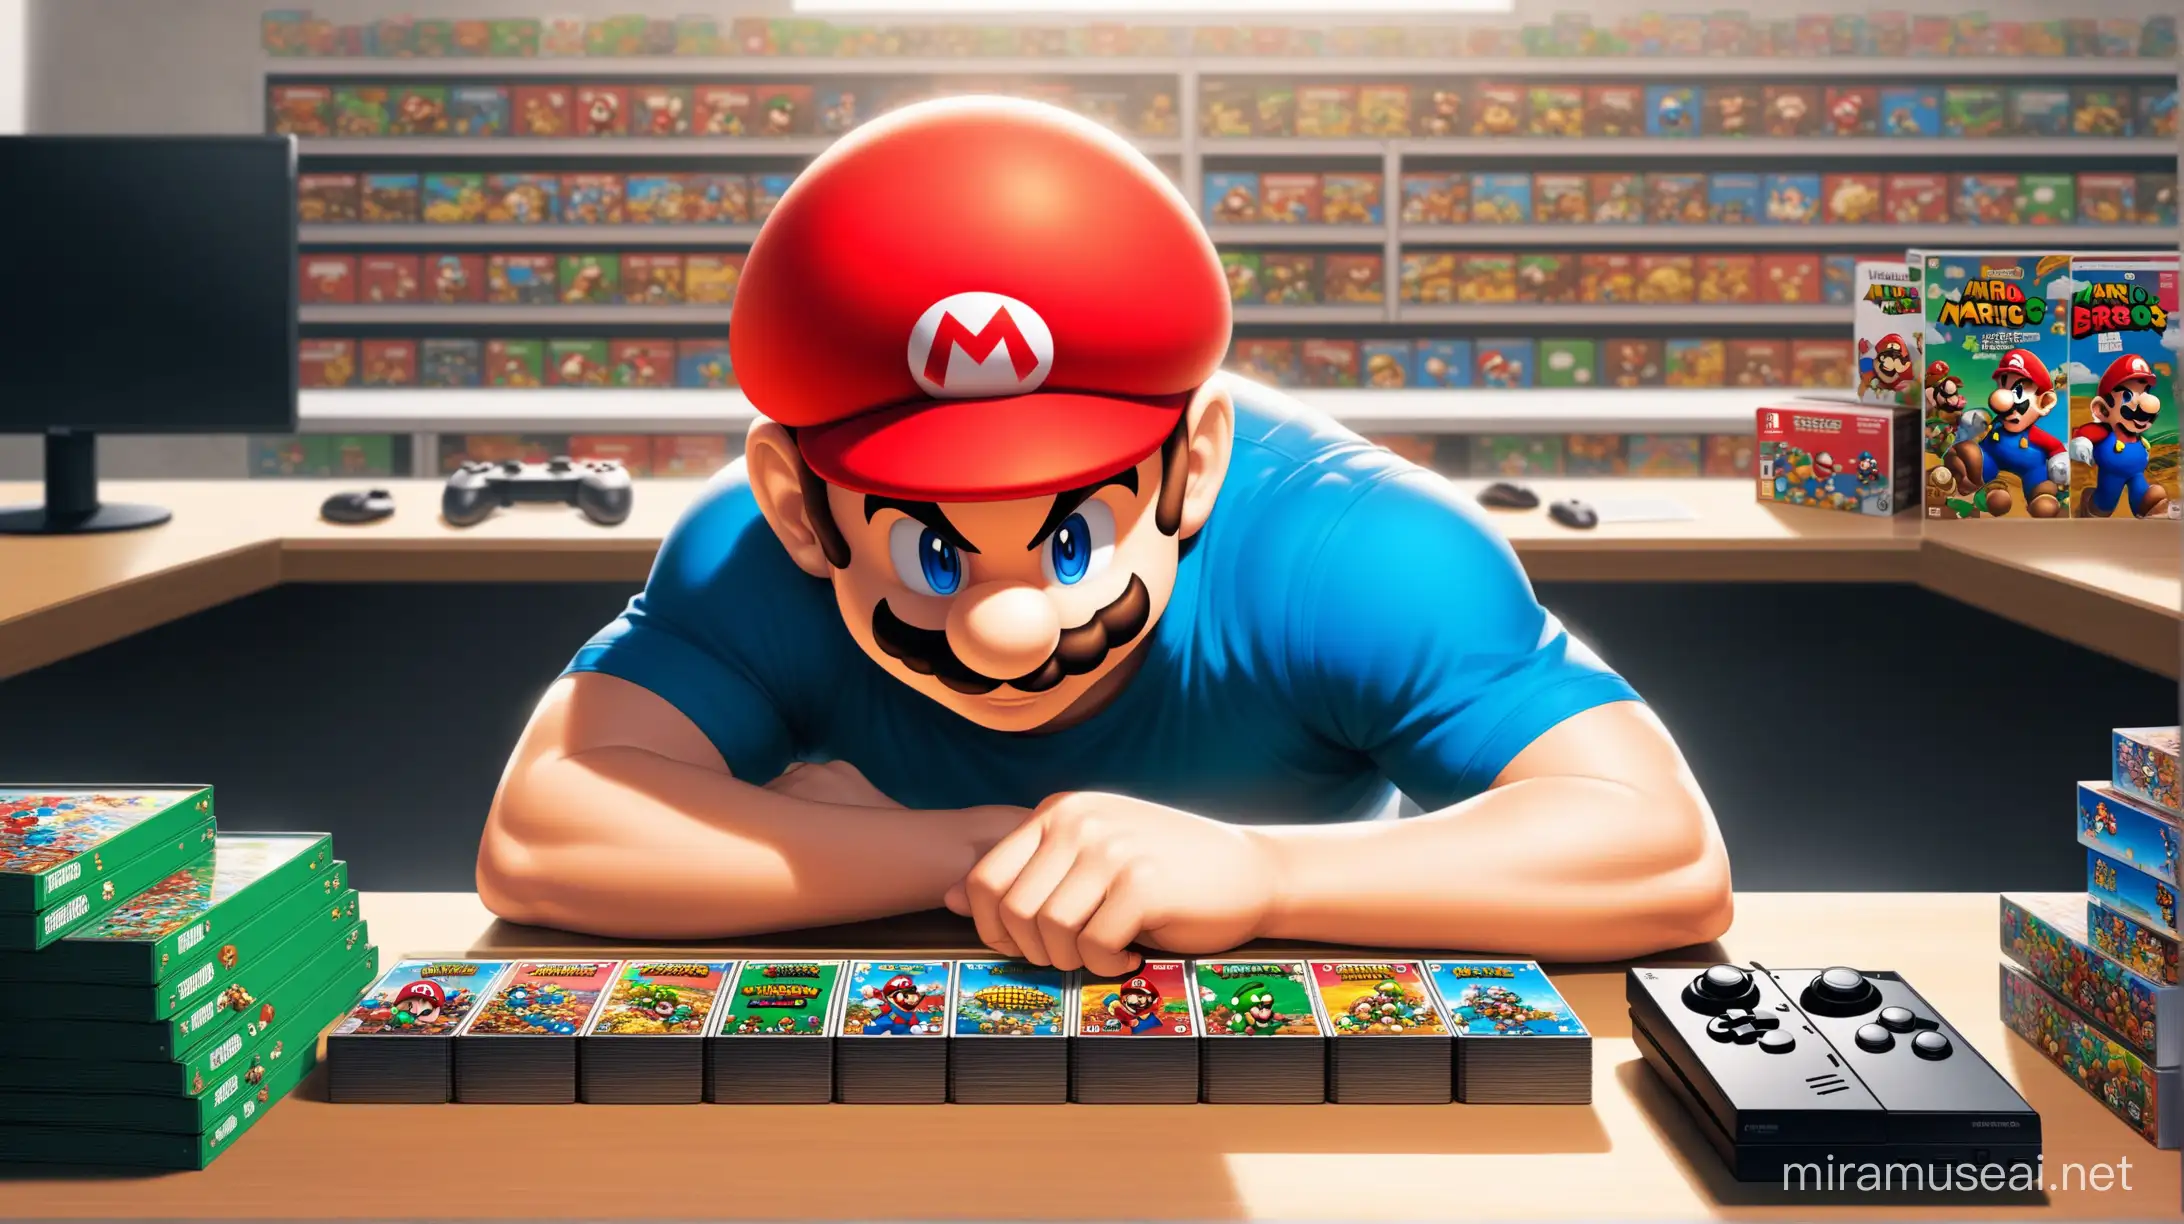 Serious Mario Bros Collecting Video Games at Desk